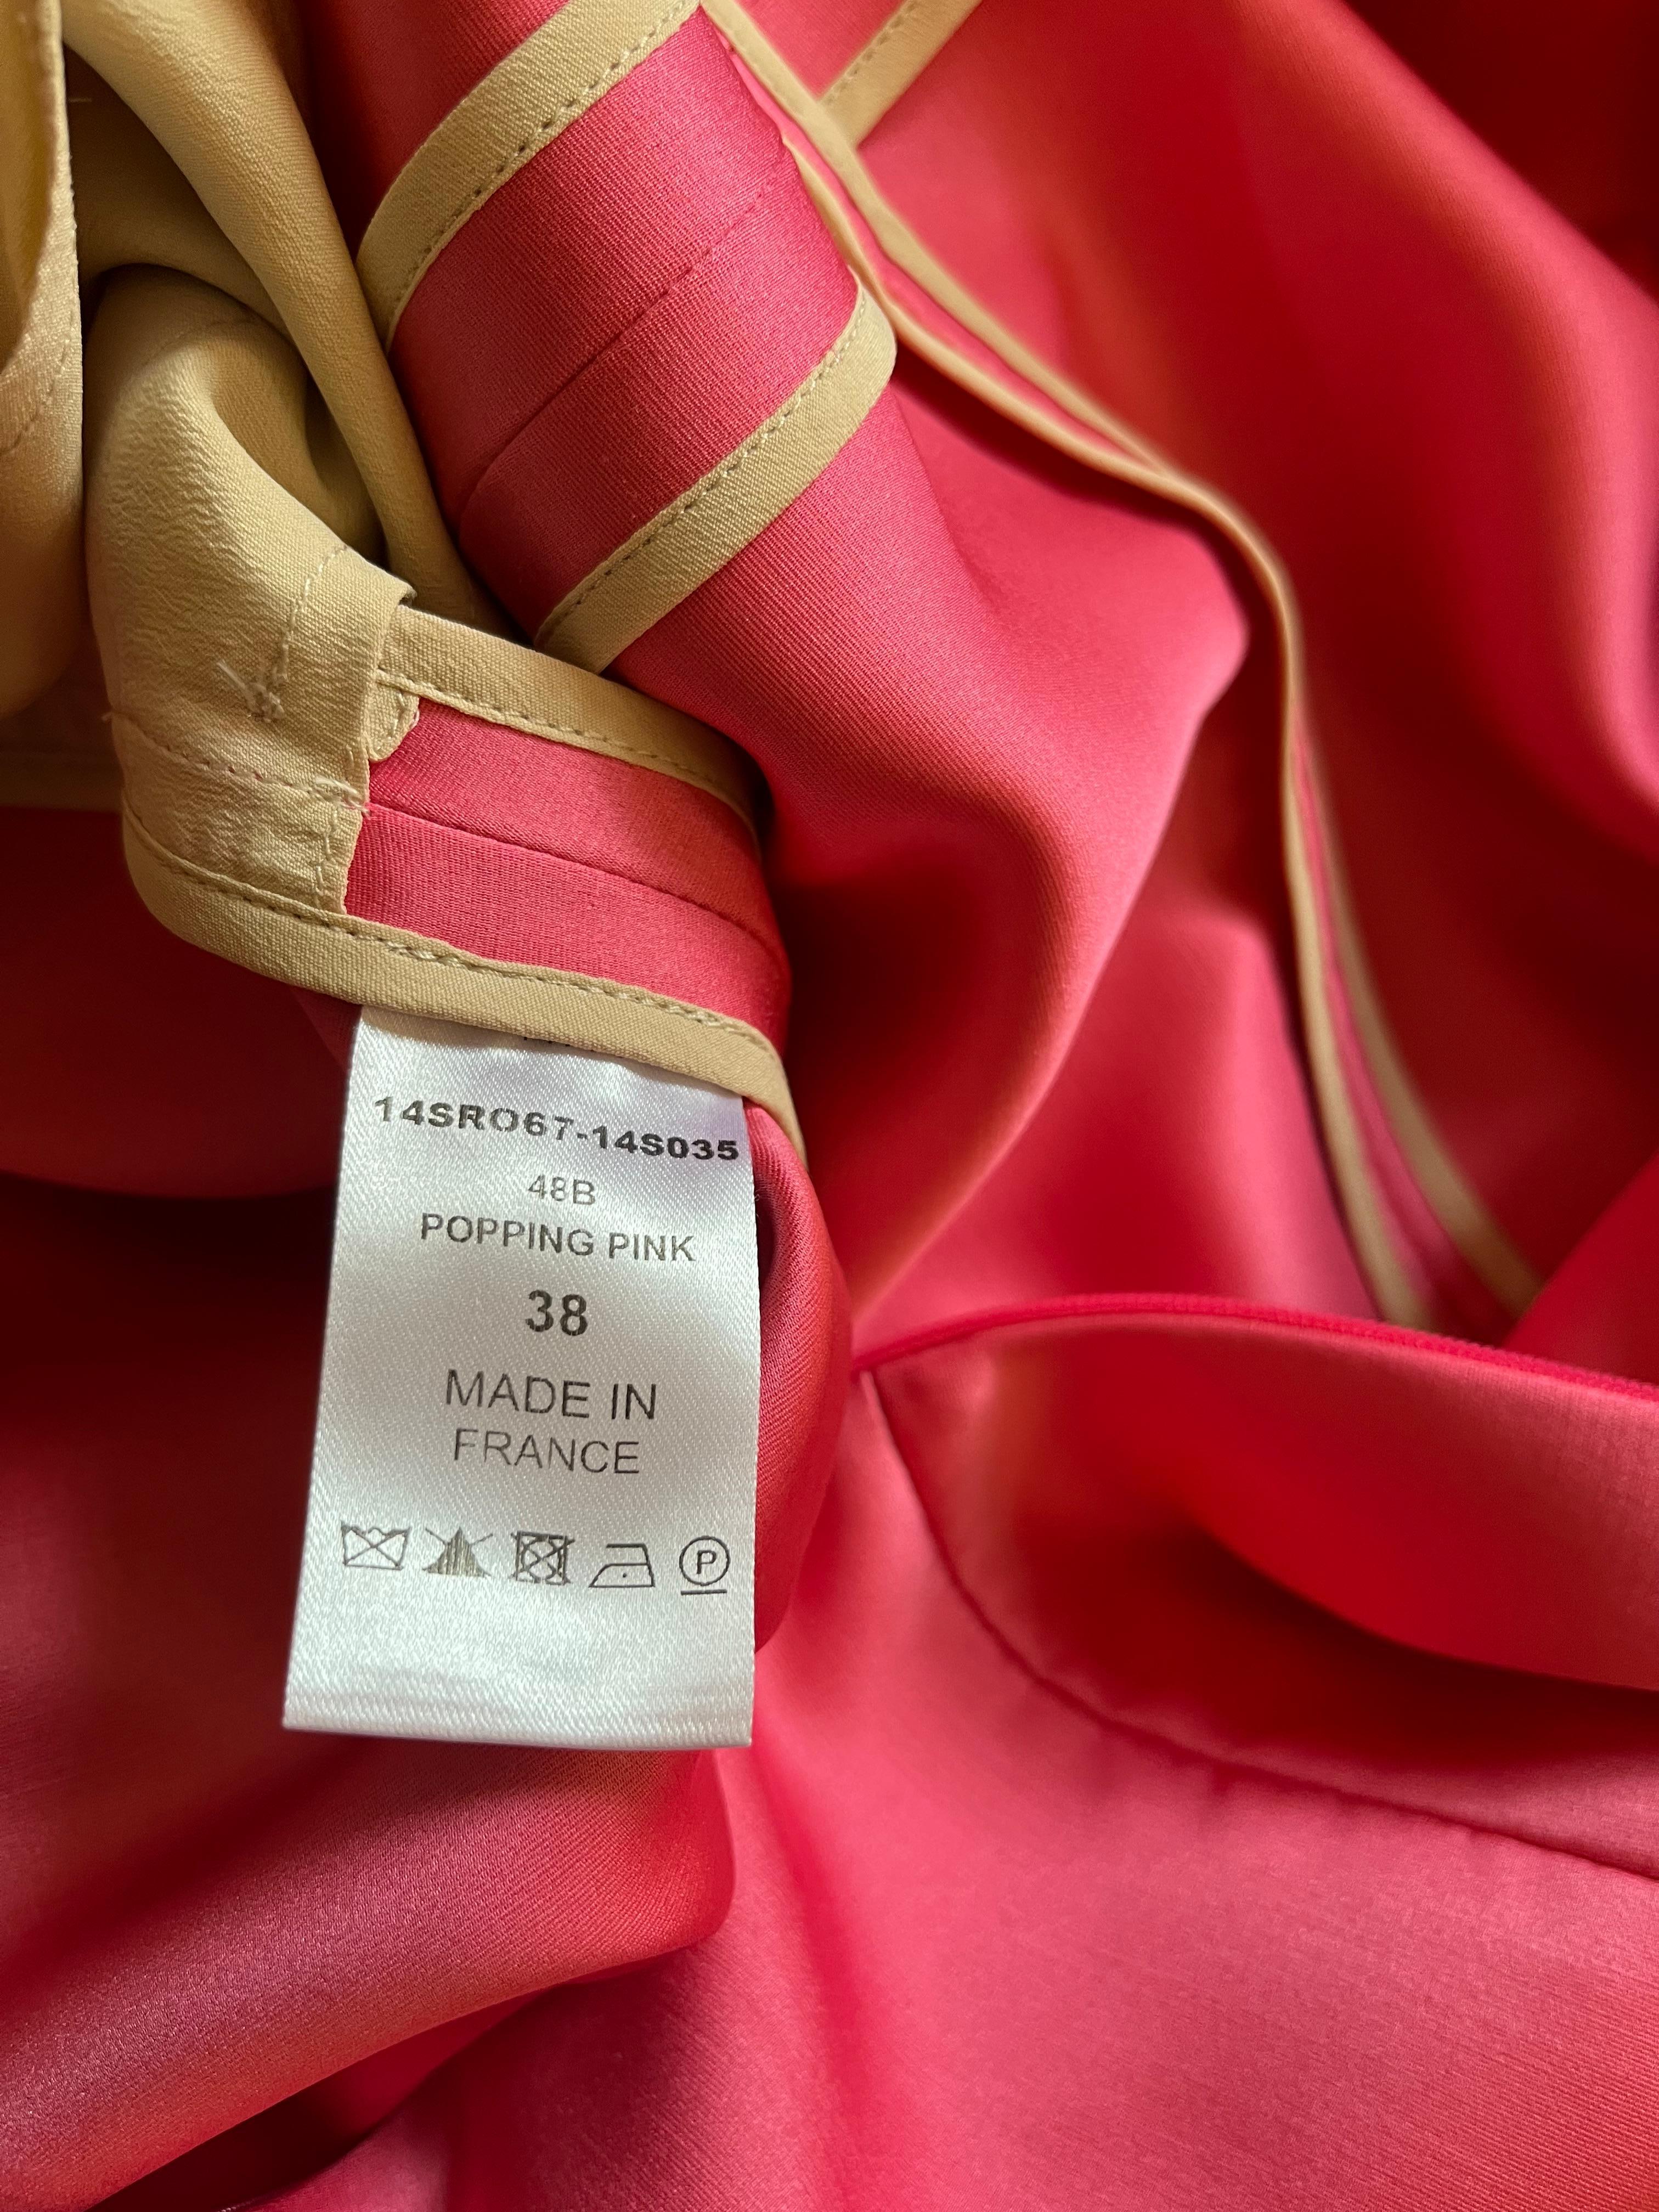 CHLOE Popping Pink Dress 38Fr For Sale 4